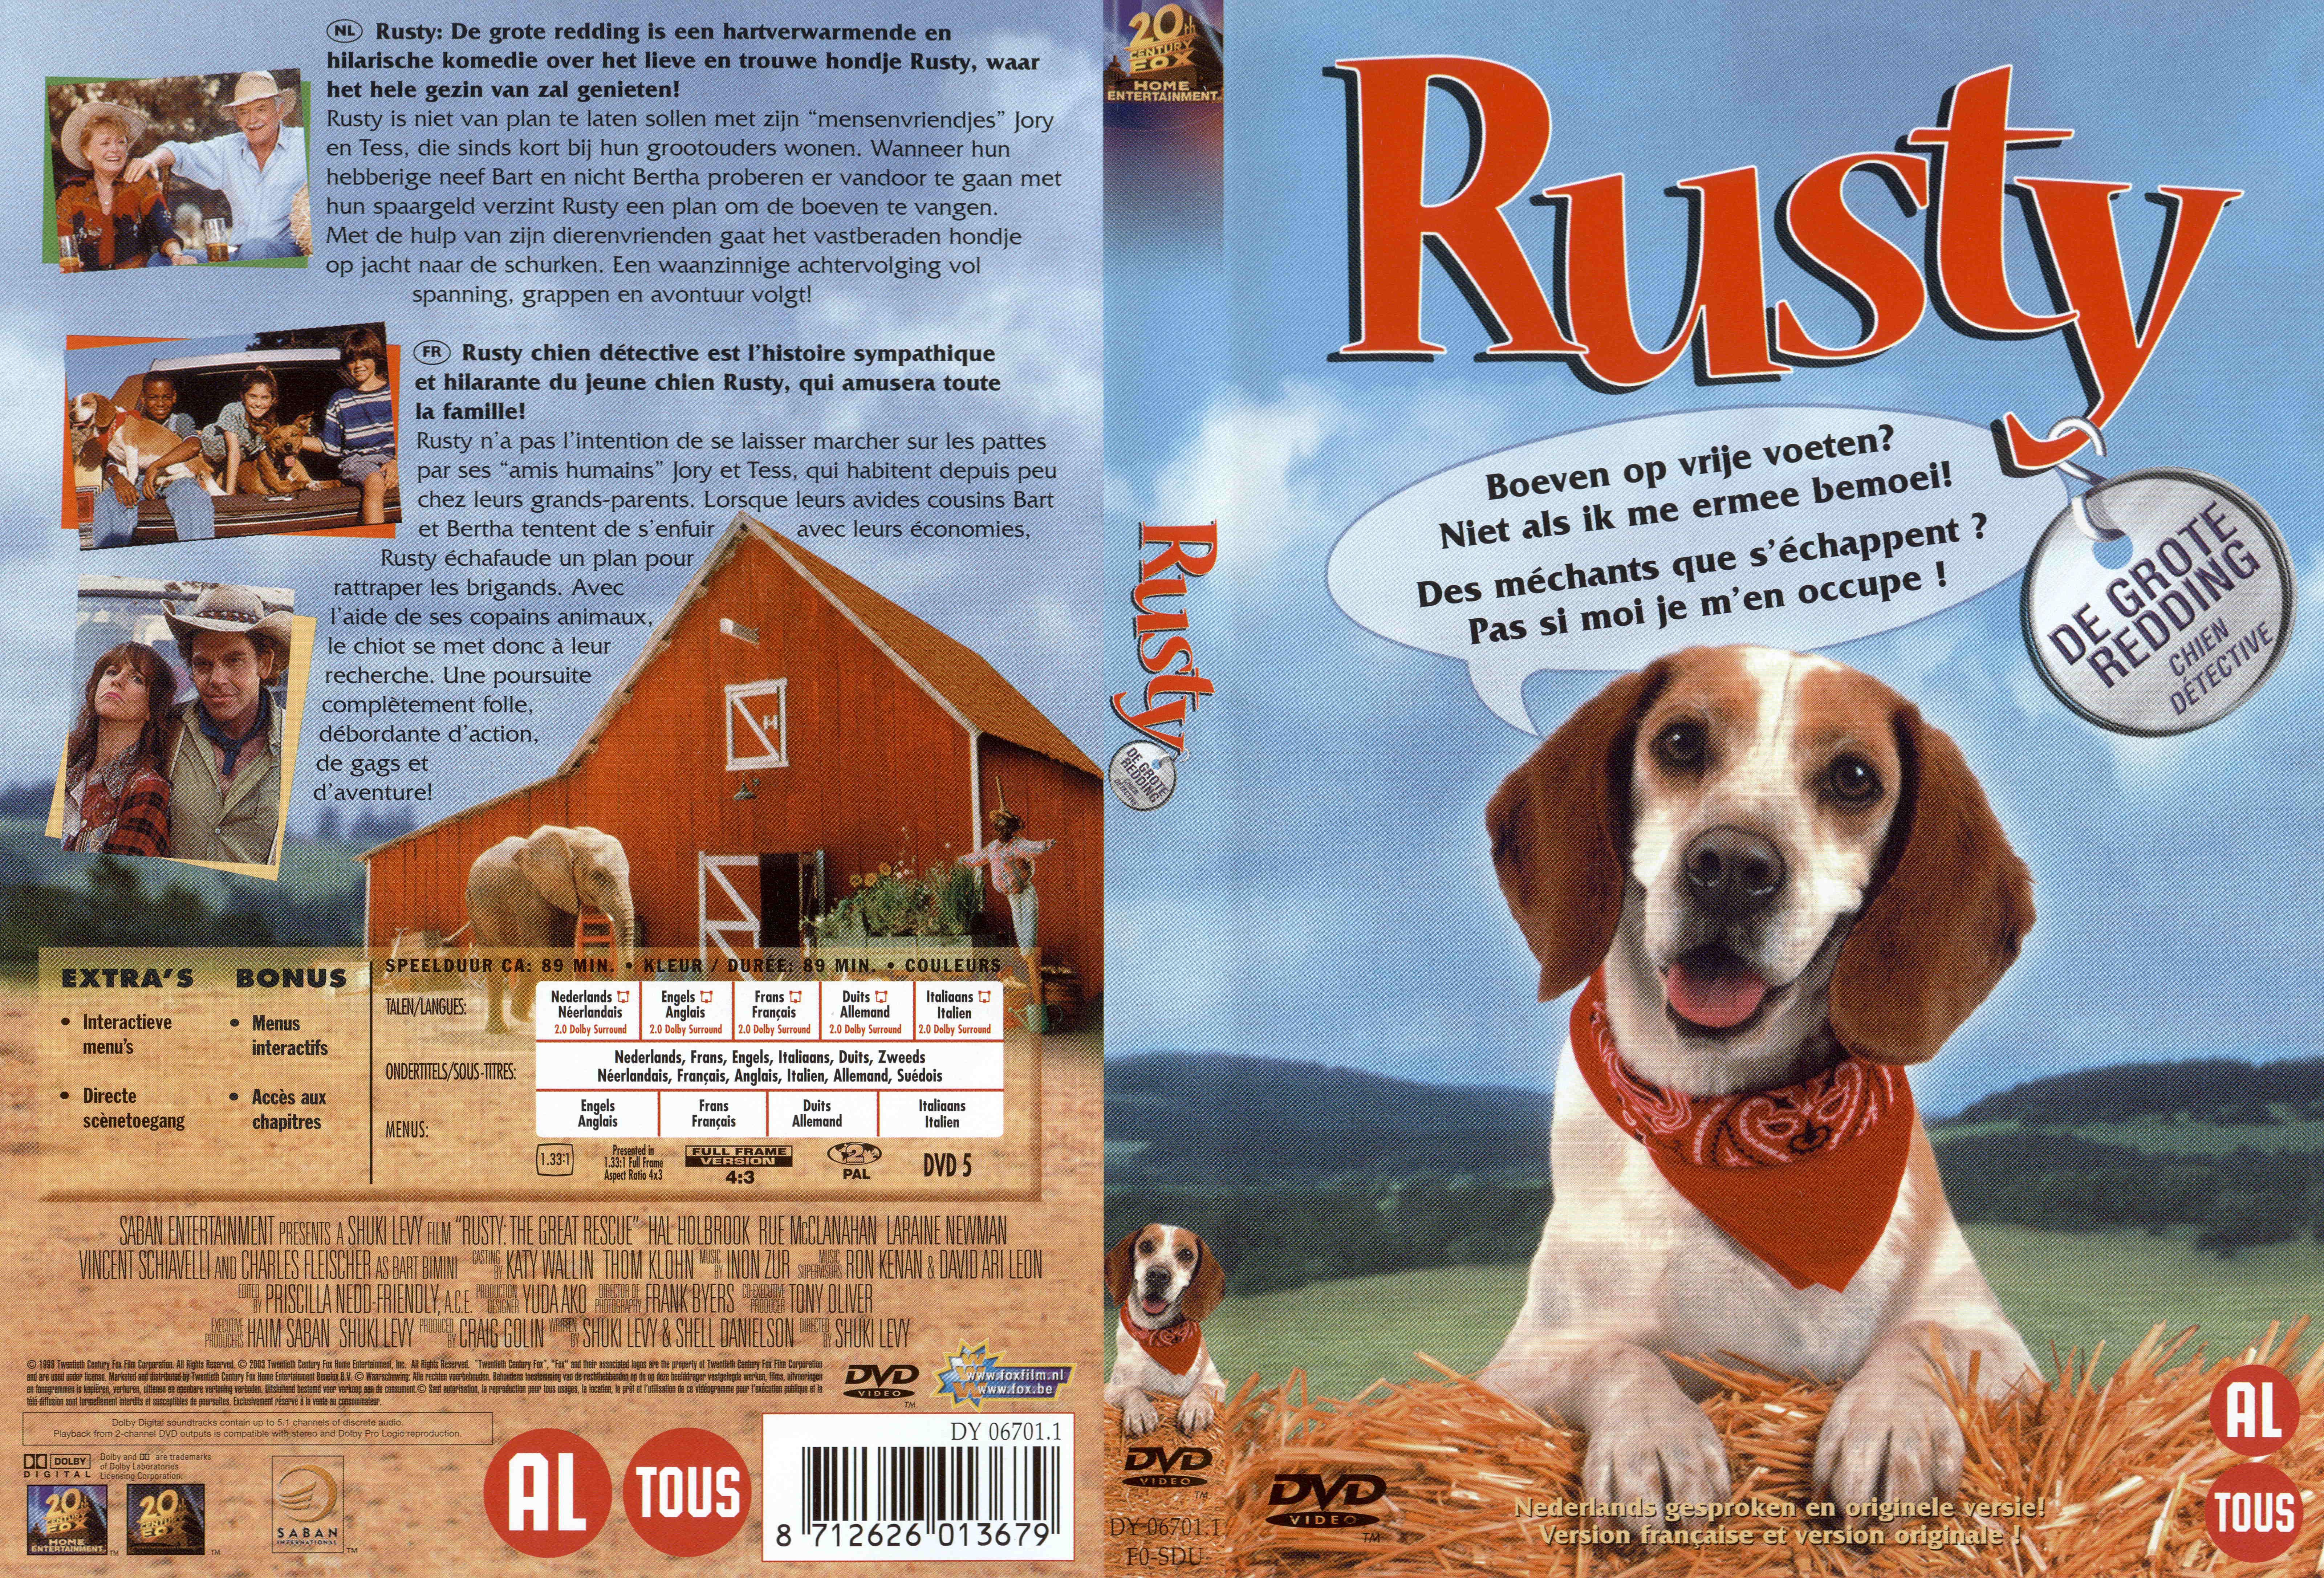 Jaquette DVD Rusty chien detective